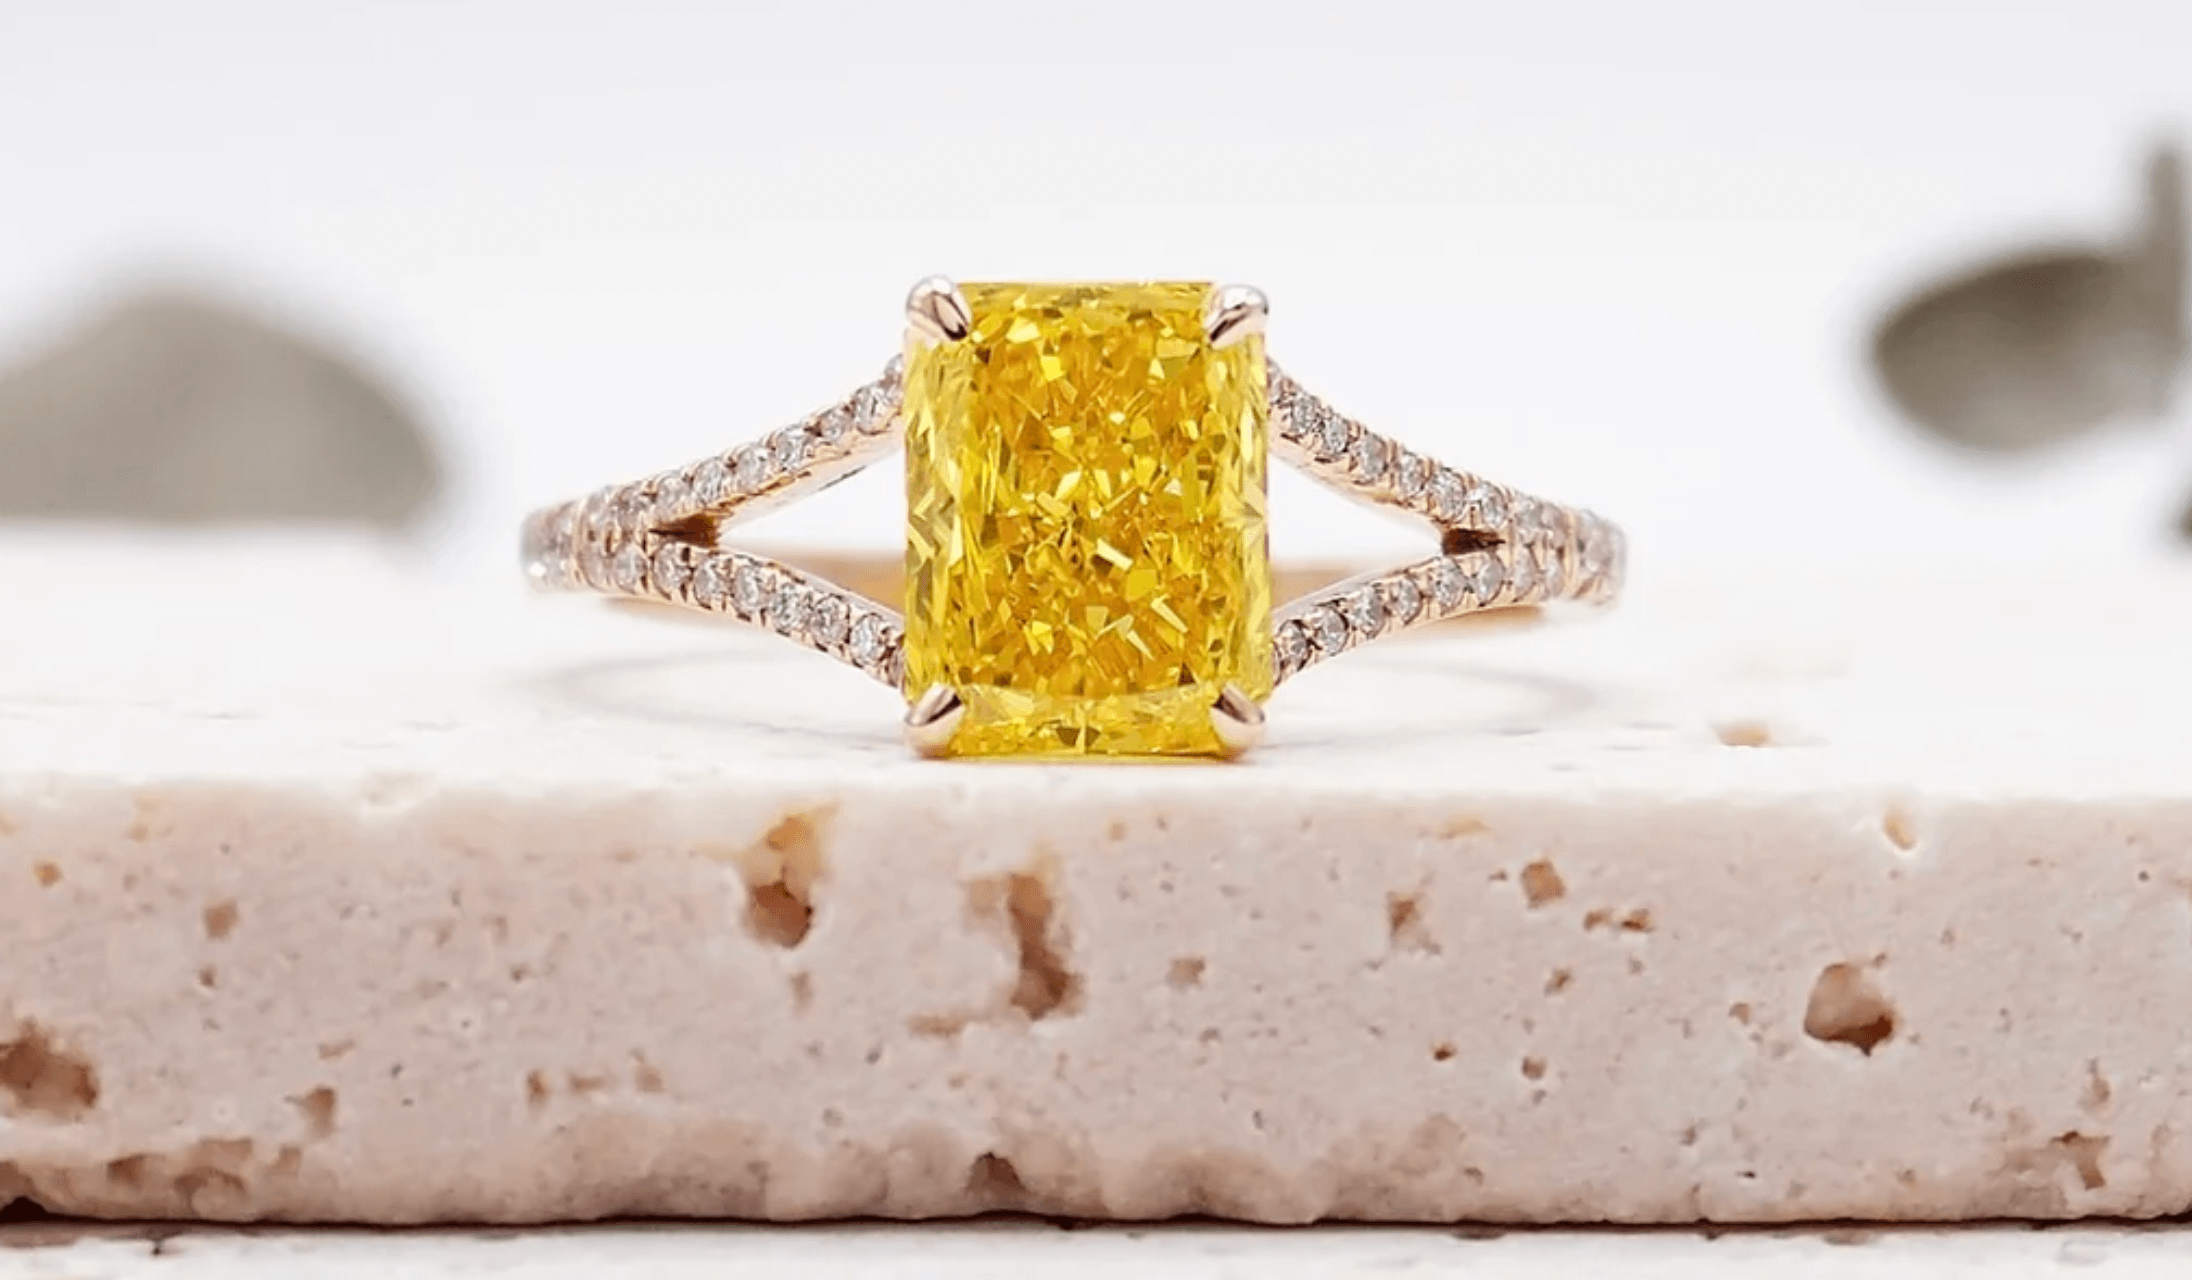 Lara Sunburst with a 1.46ct Fancy Vivid Yellow Radiant Cut Lab Diamond